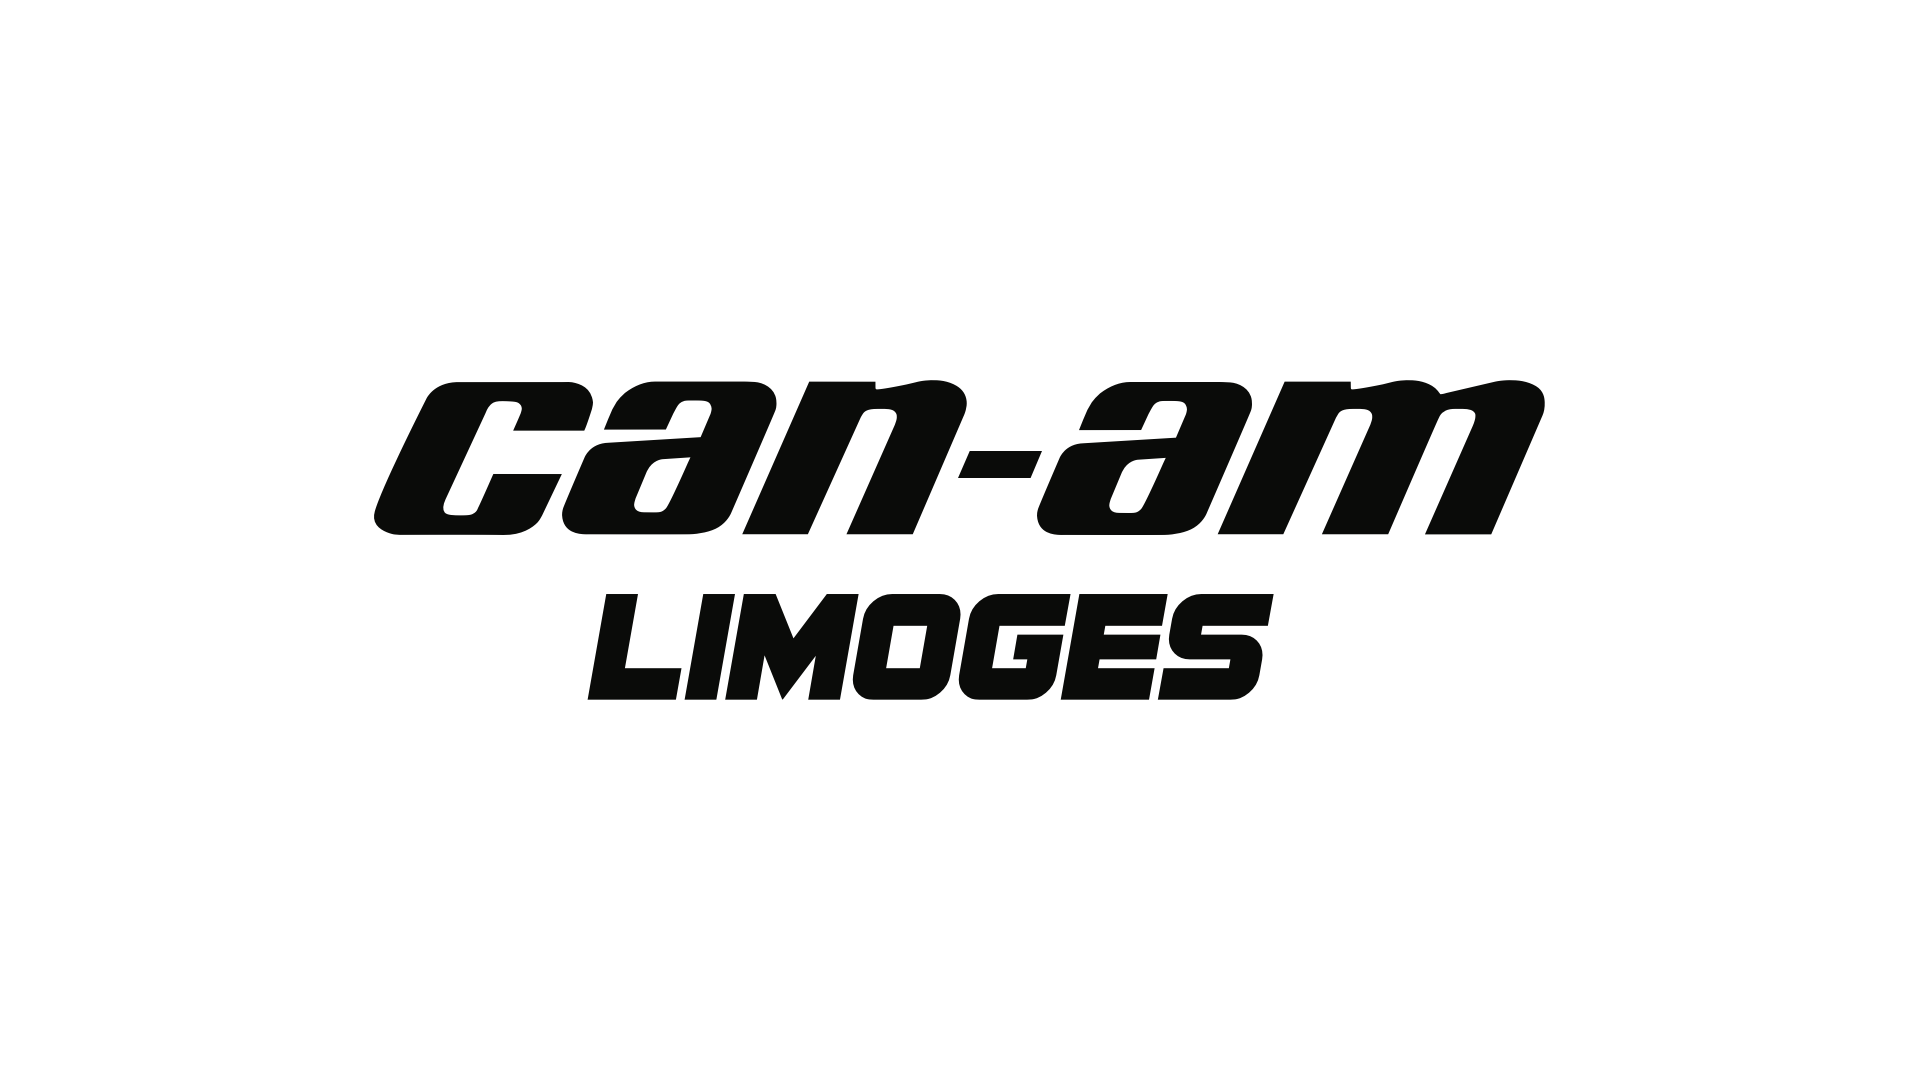 logo can-am